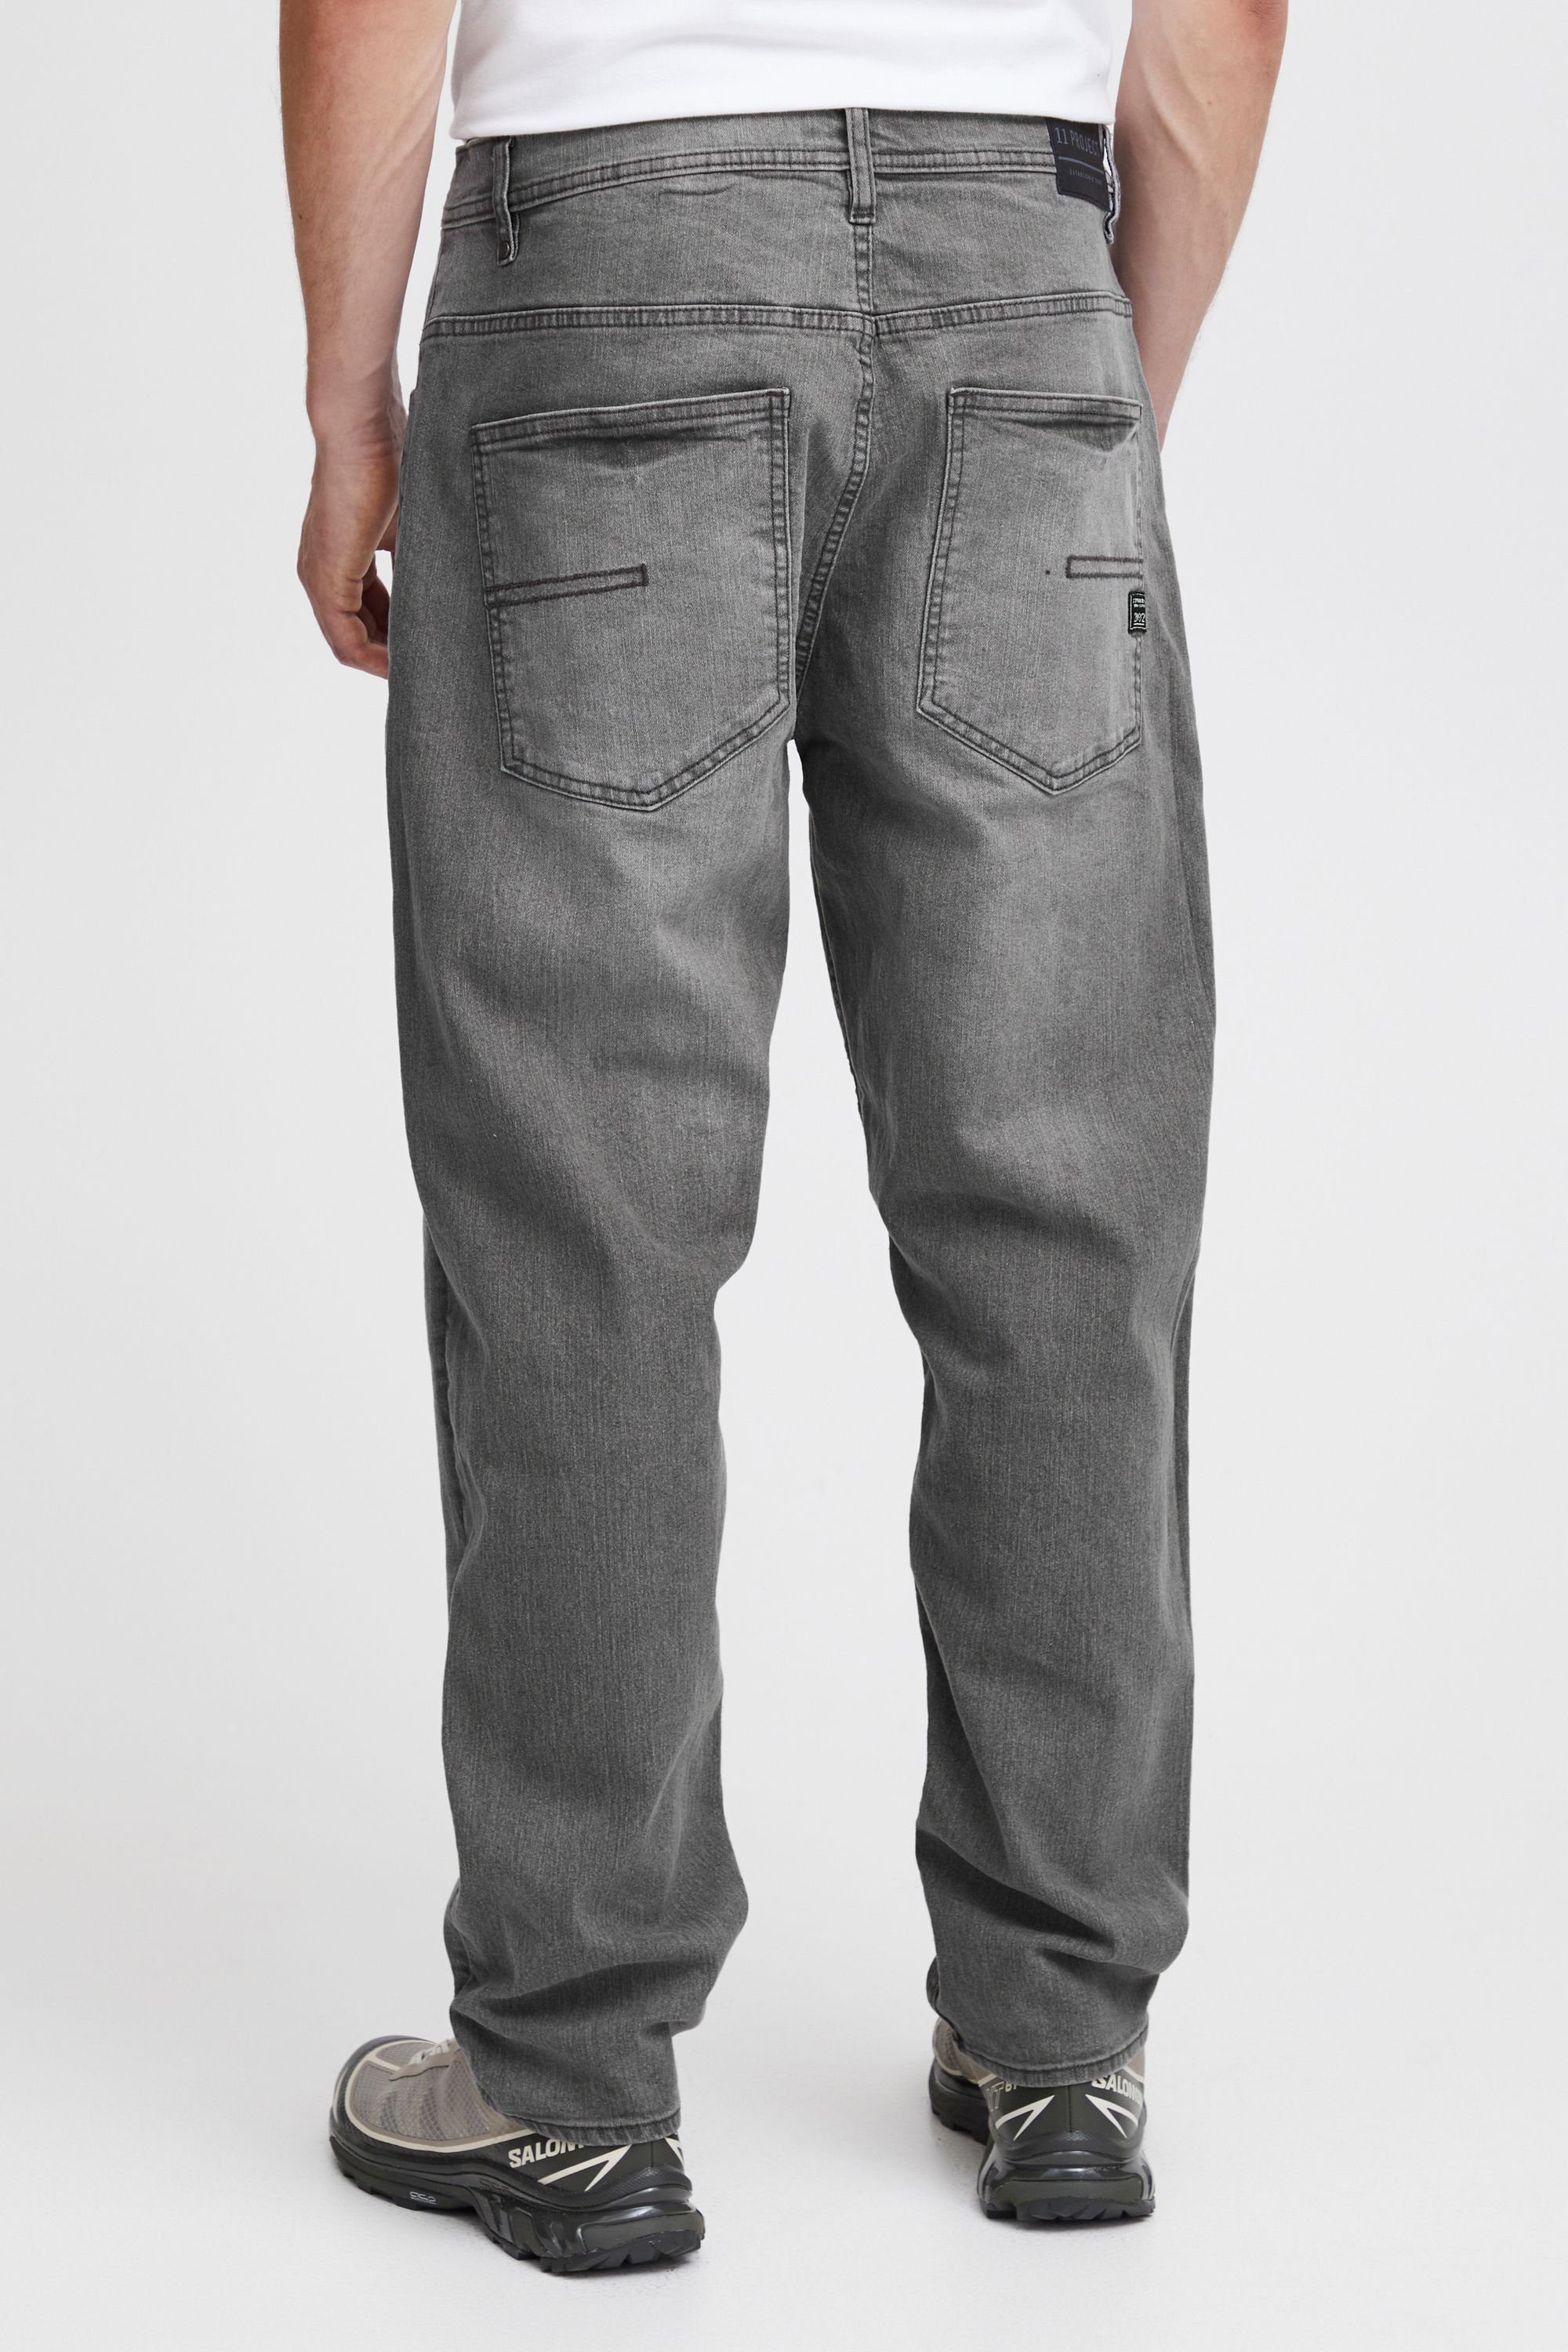 Project PRMads Denim Project grey 11 5-Pocket-Jeans 11